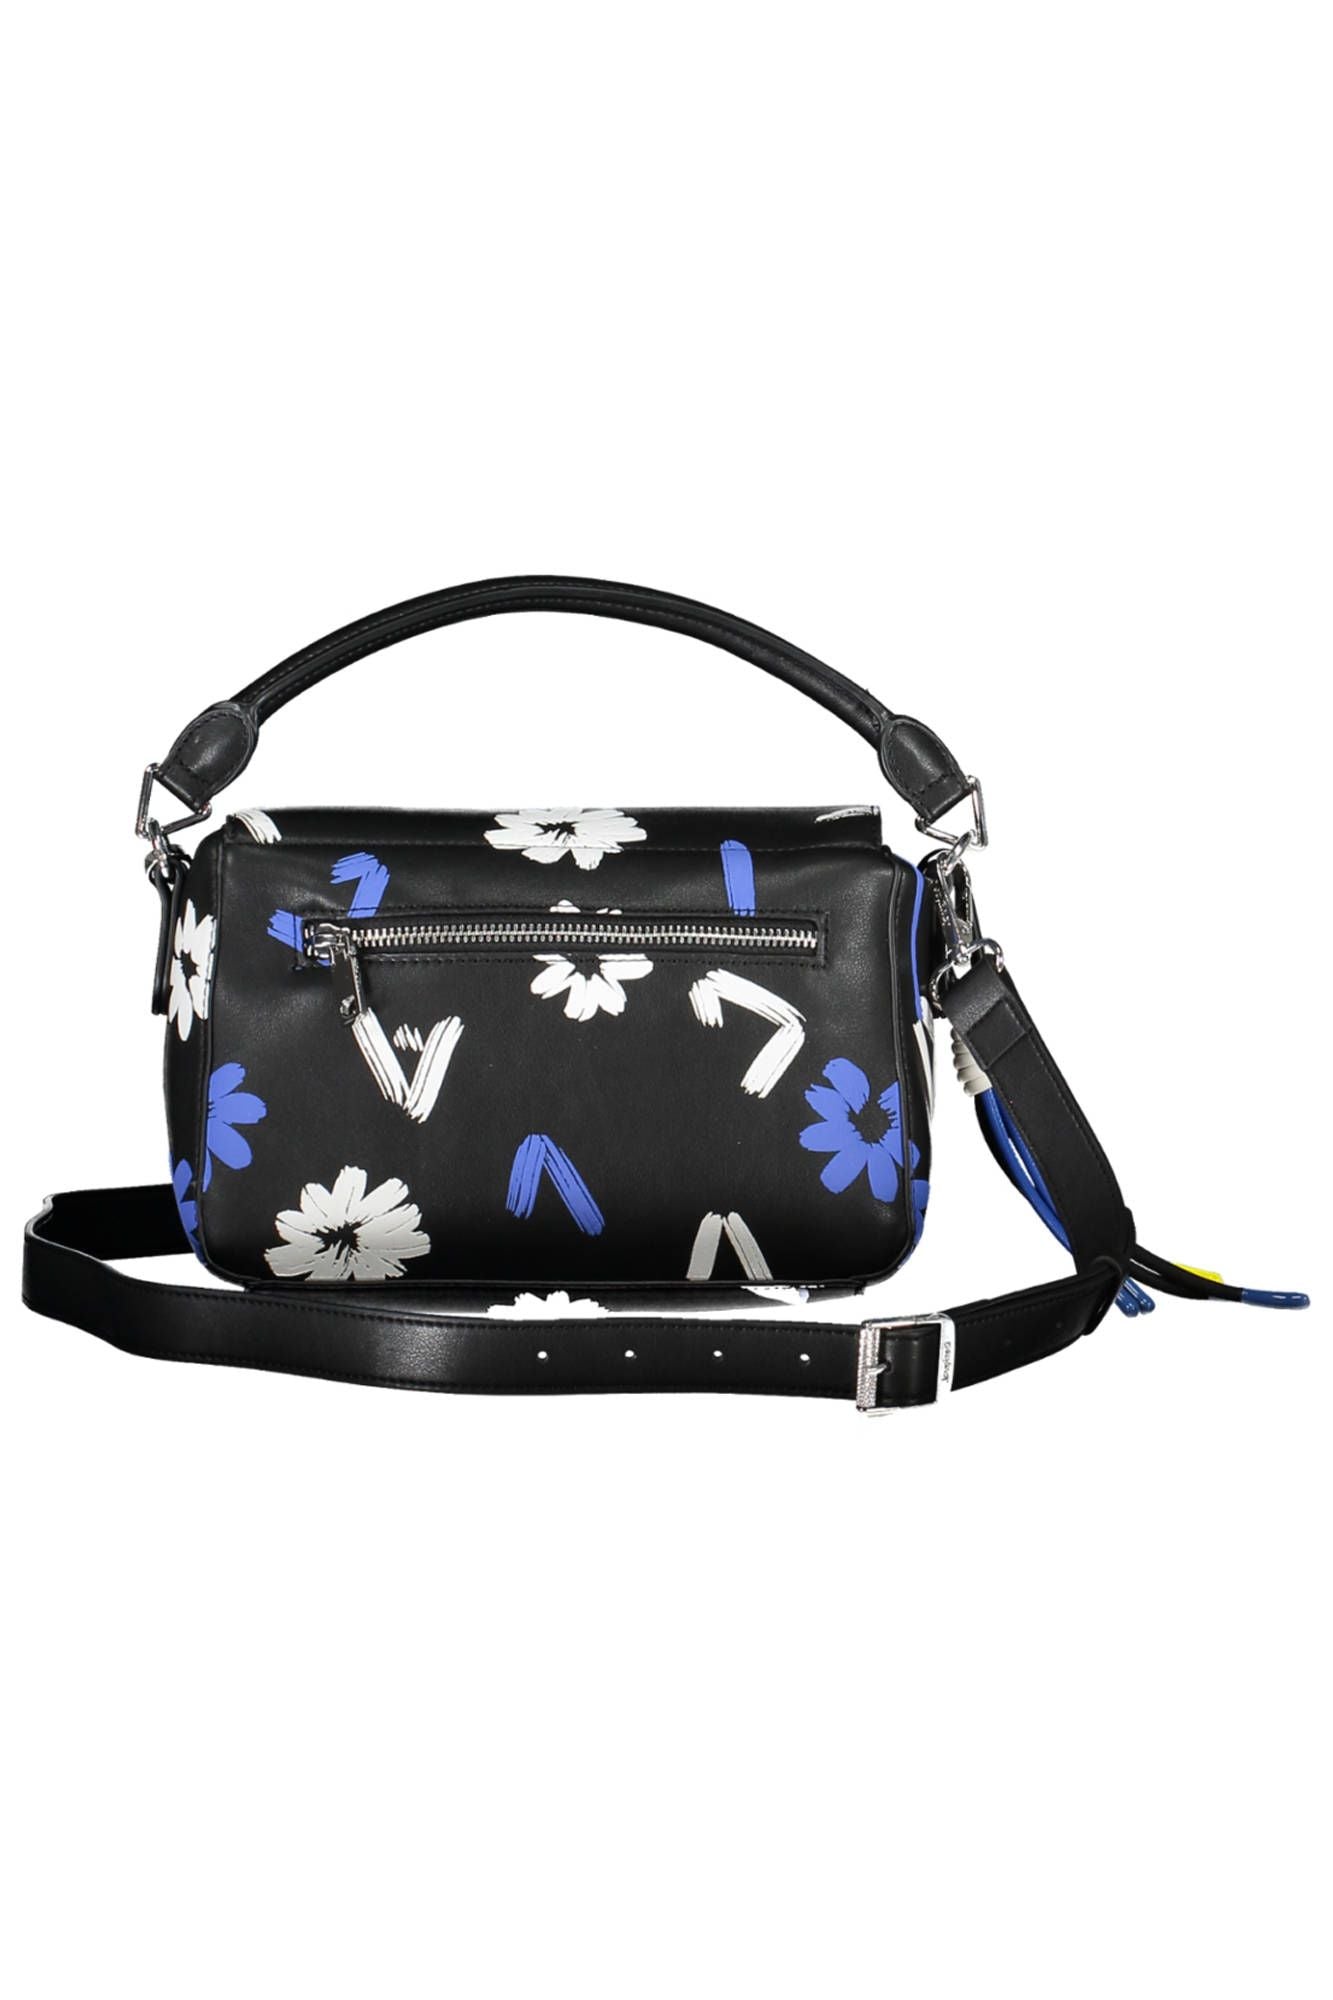 Chic Black Polyurethane Handbag with Contrasting Details